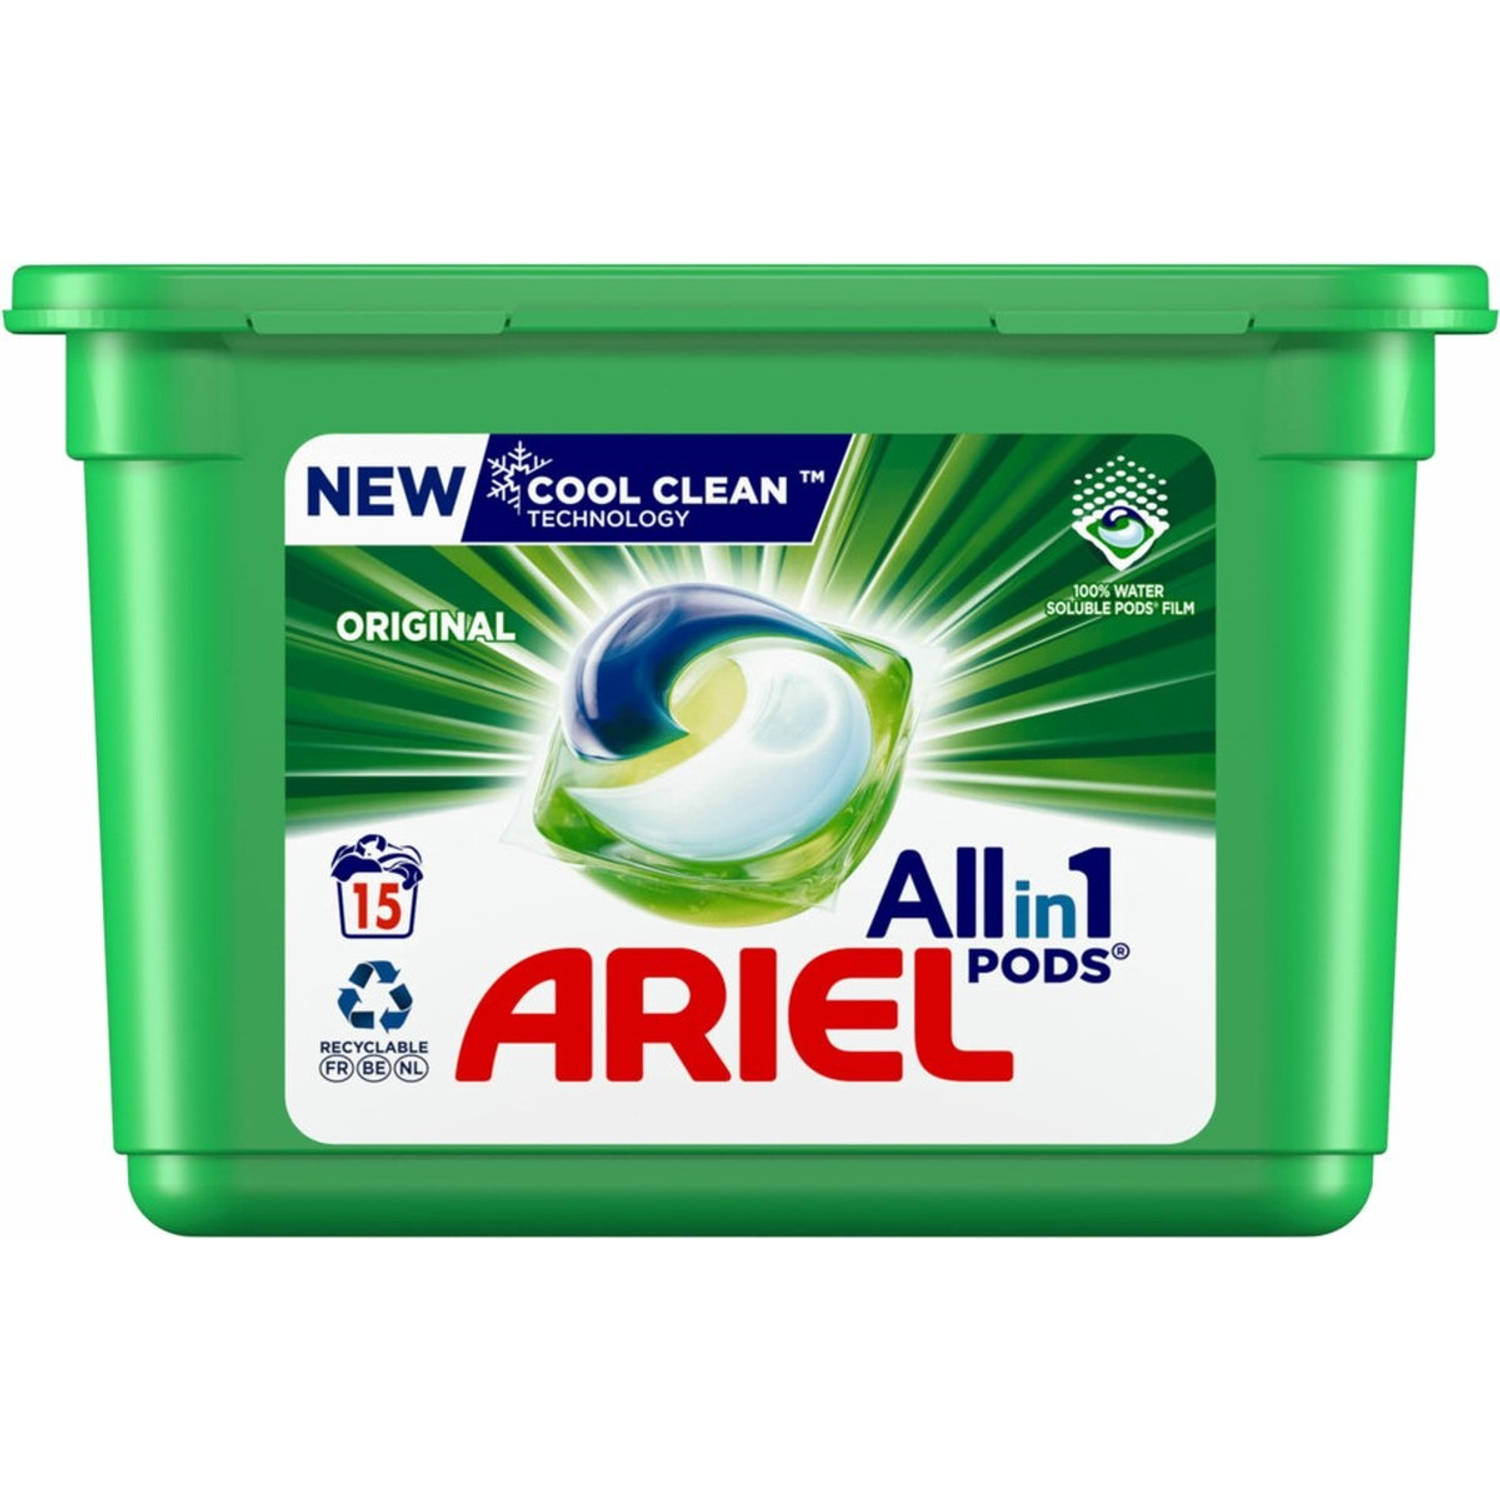 Ariel - All in 1 Pods - Original - 6 x 15 stuks